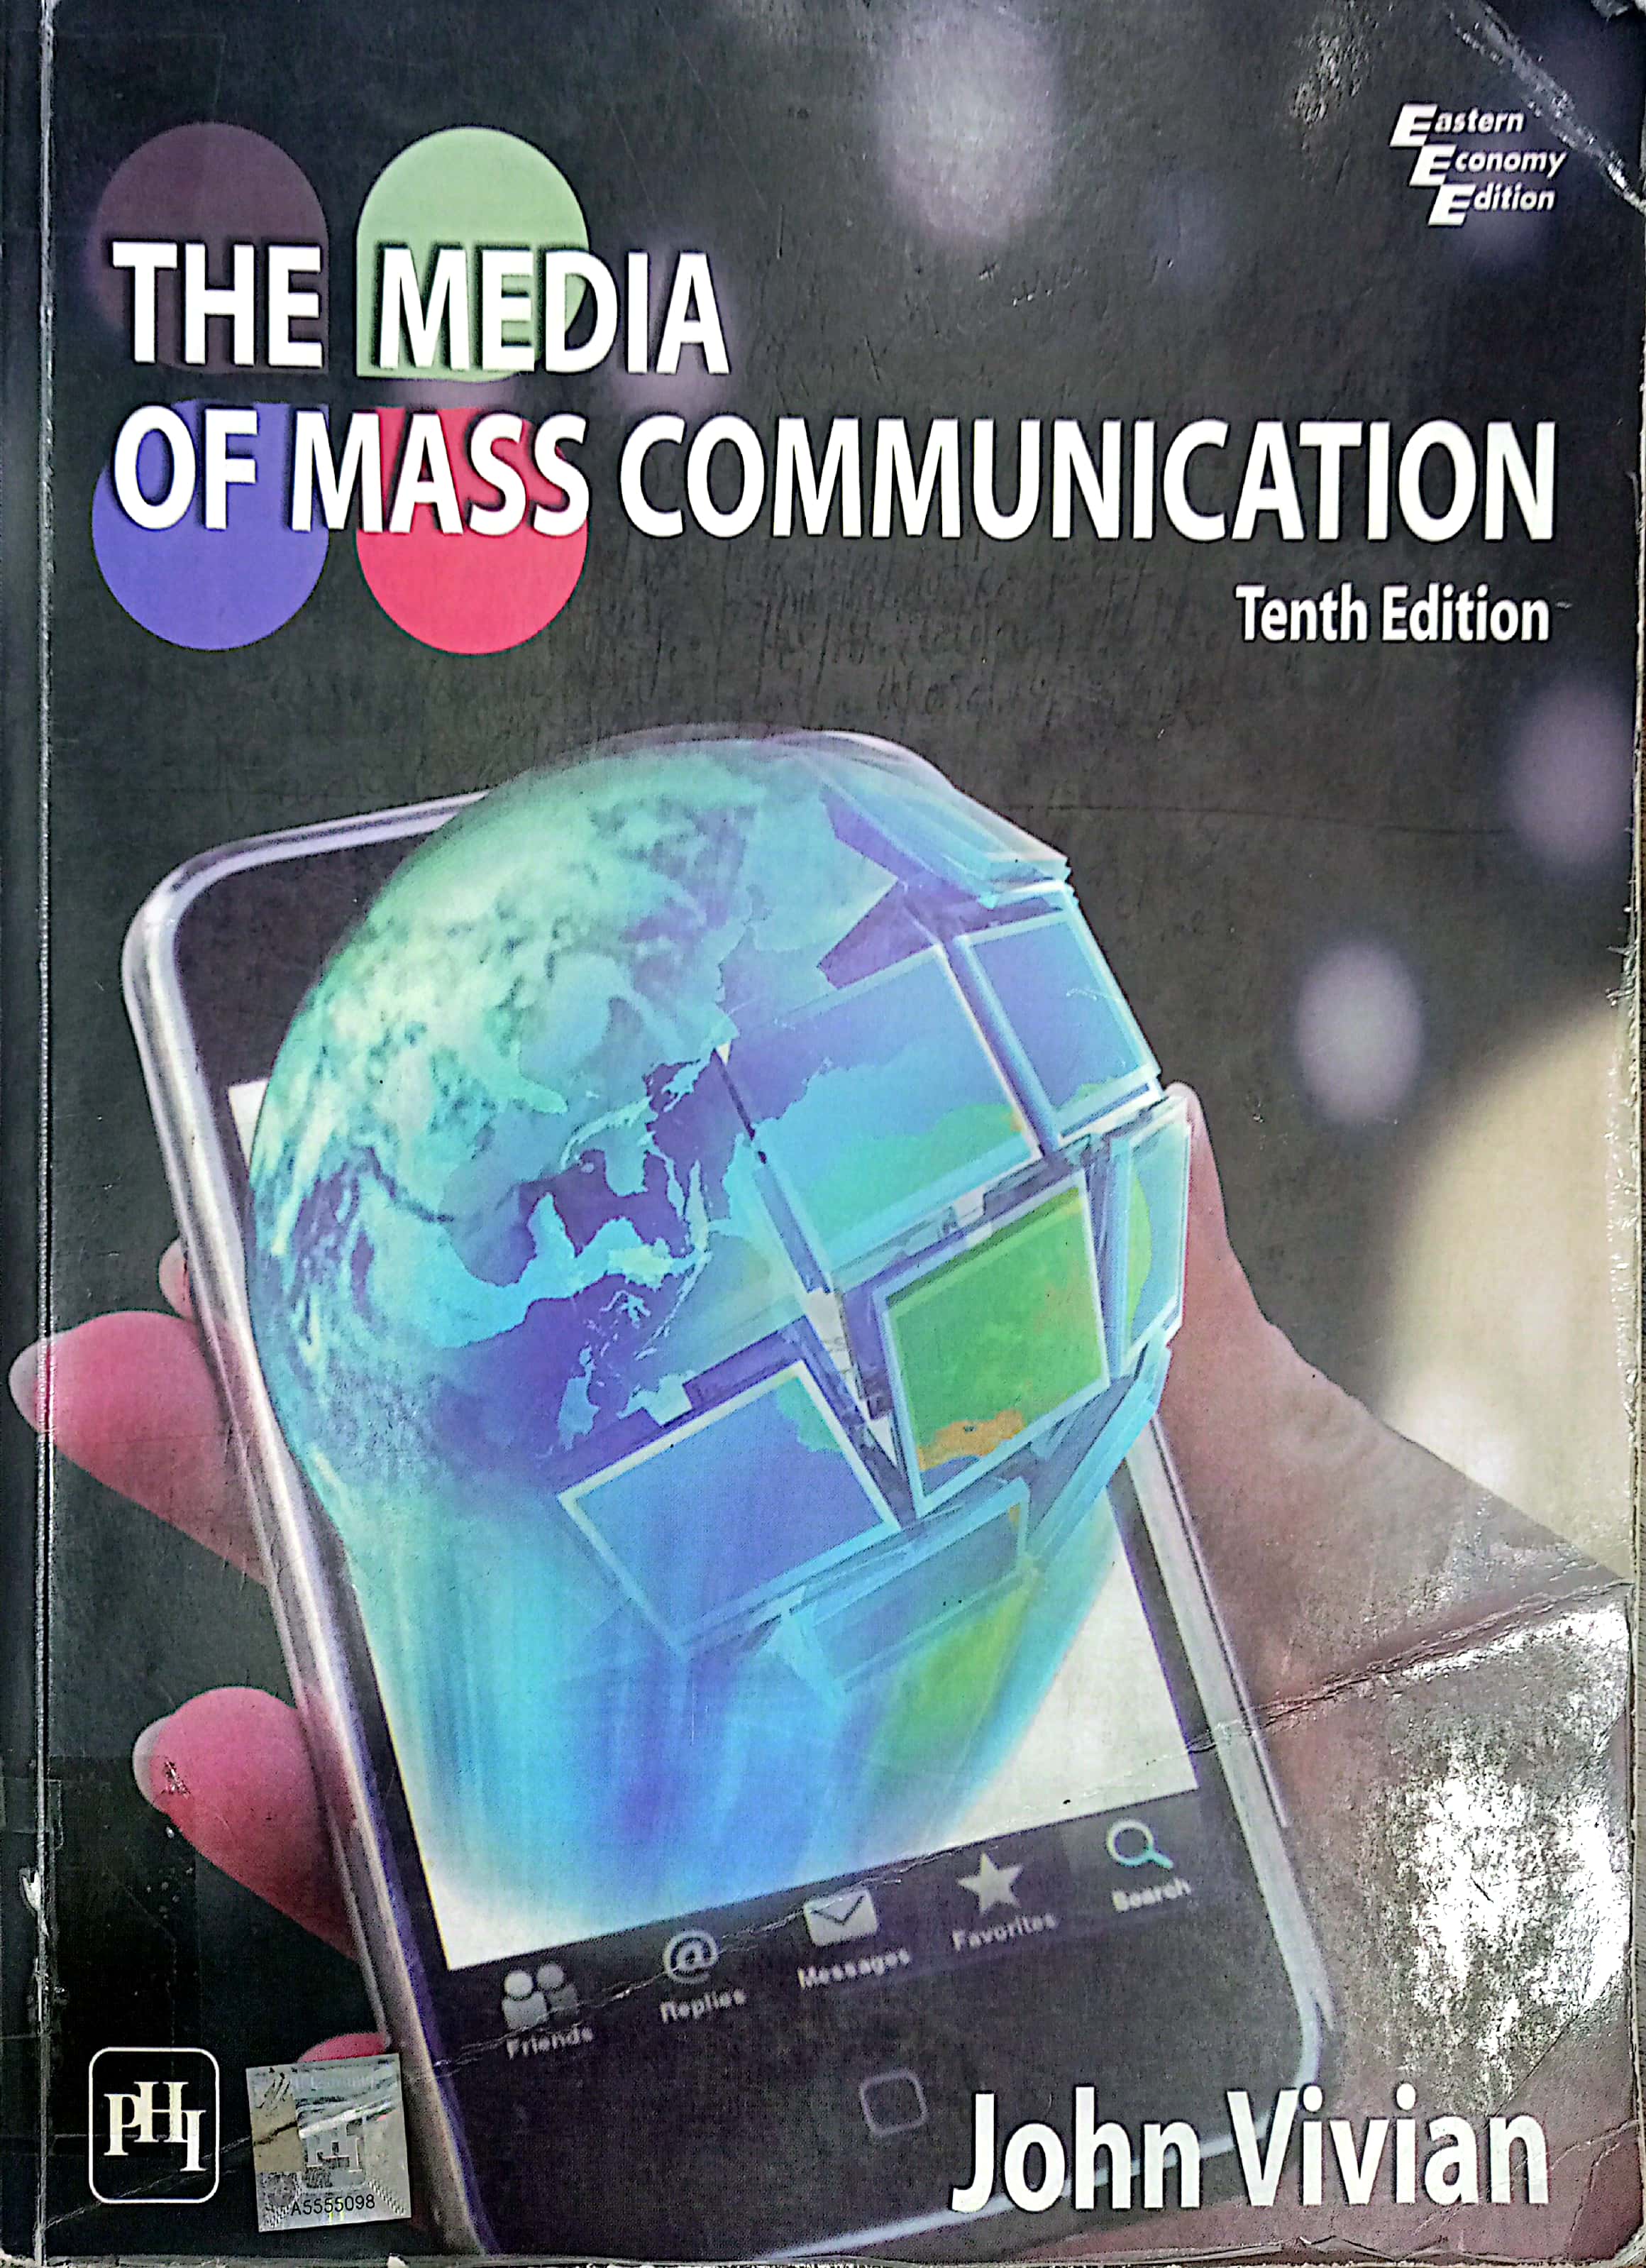 The media of mass communication